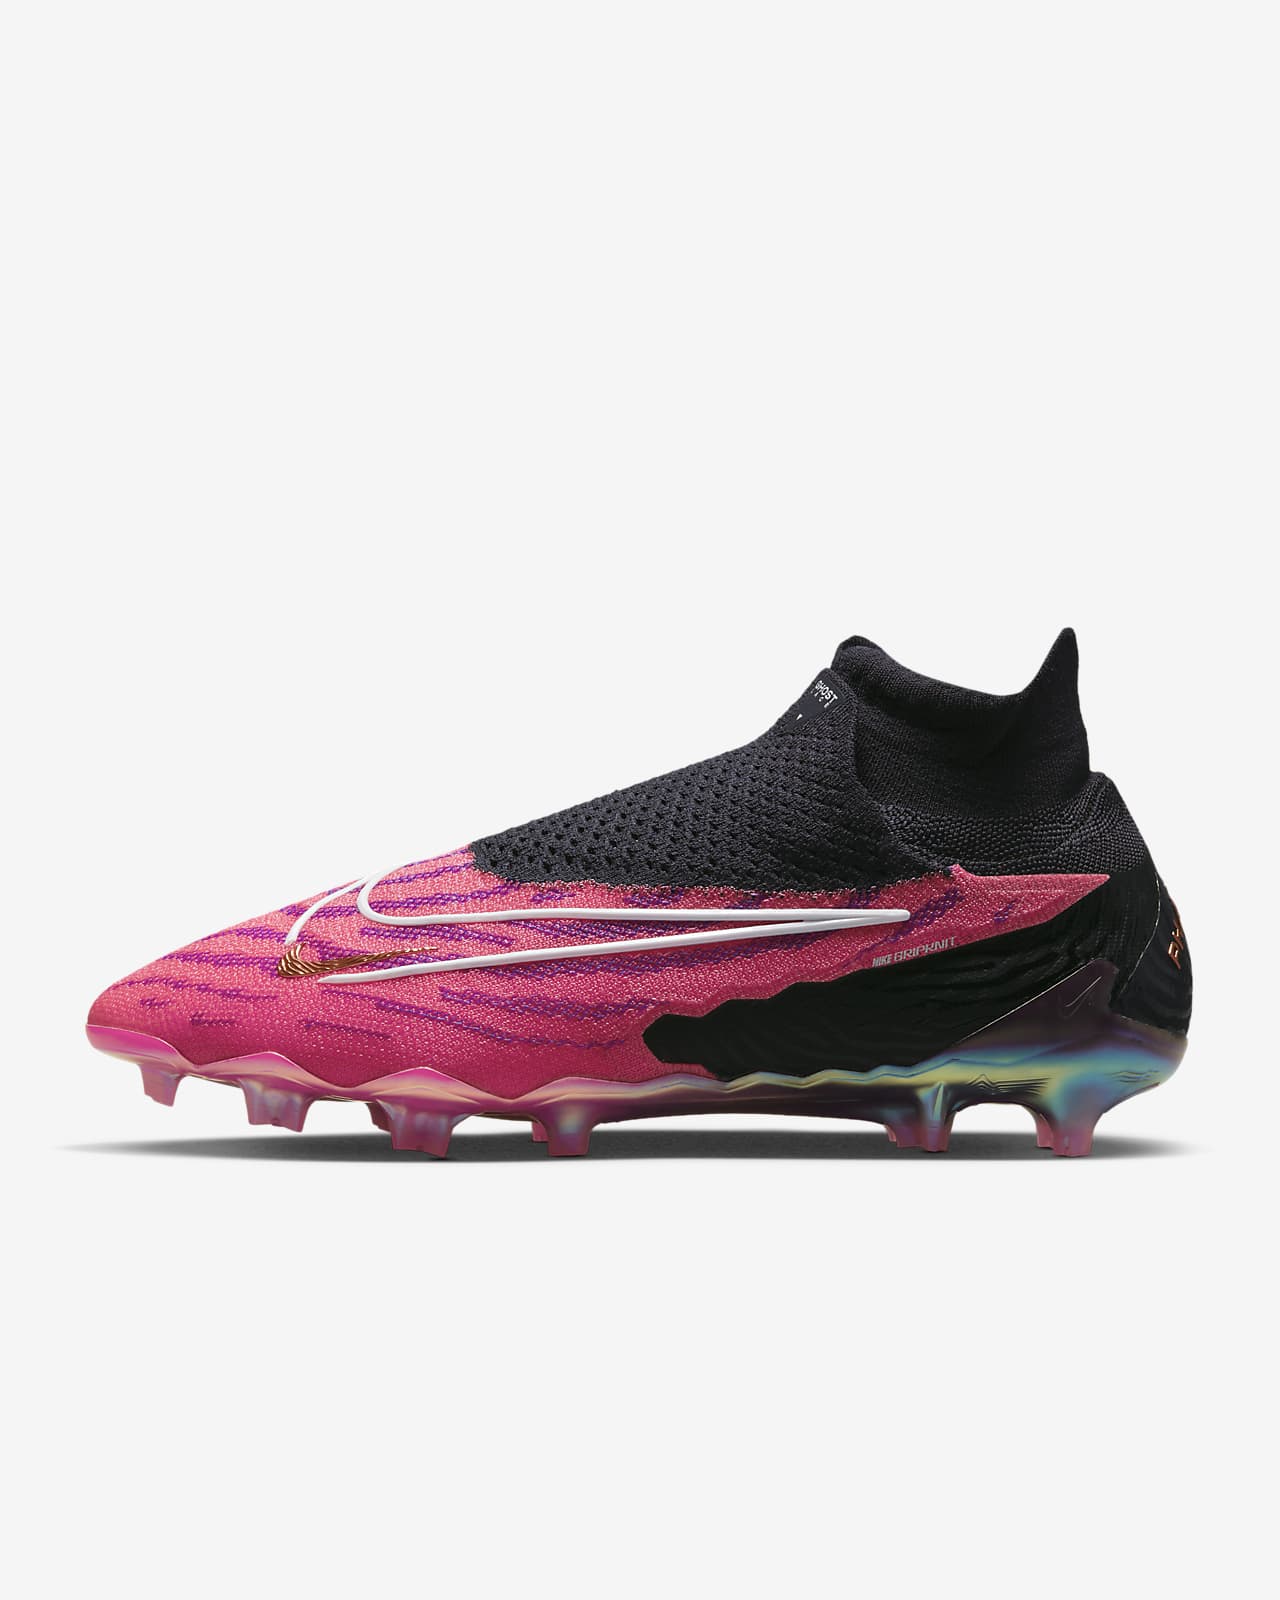 nike phantom football boots pink